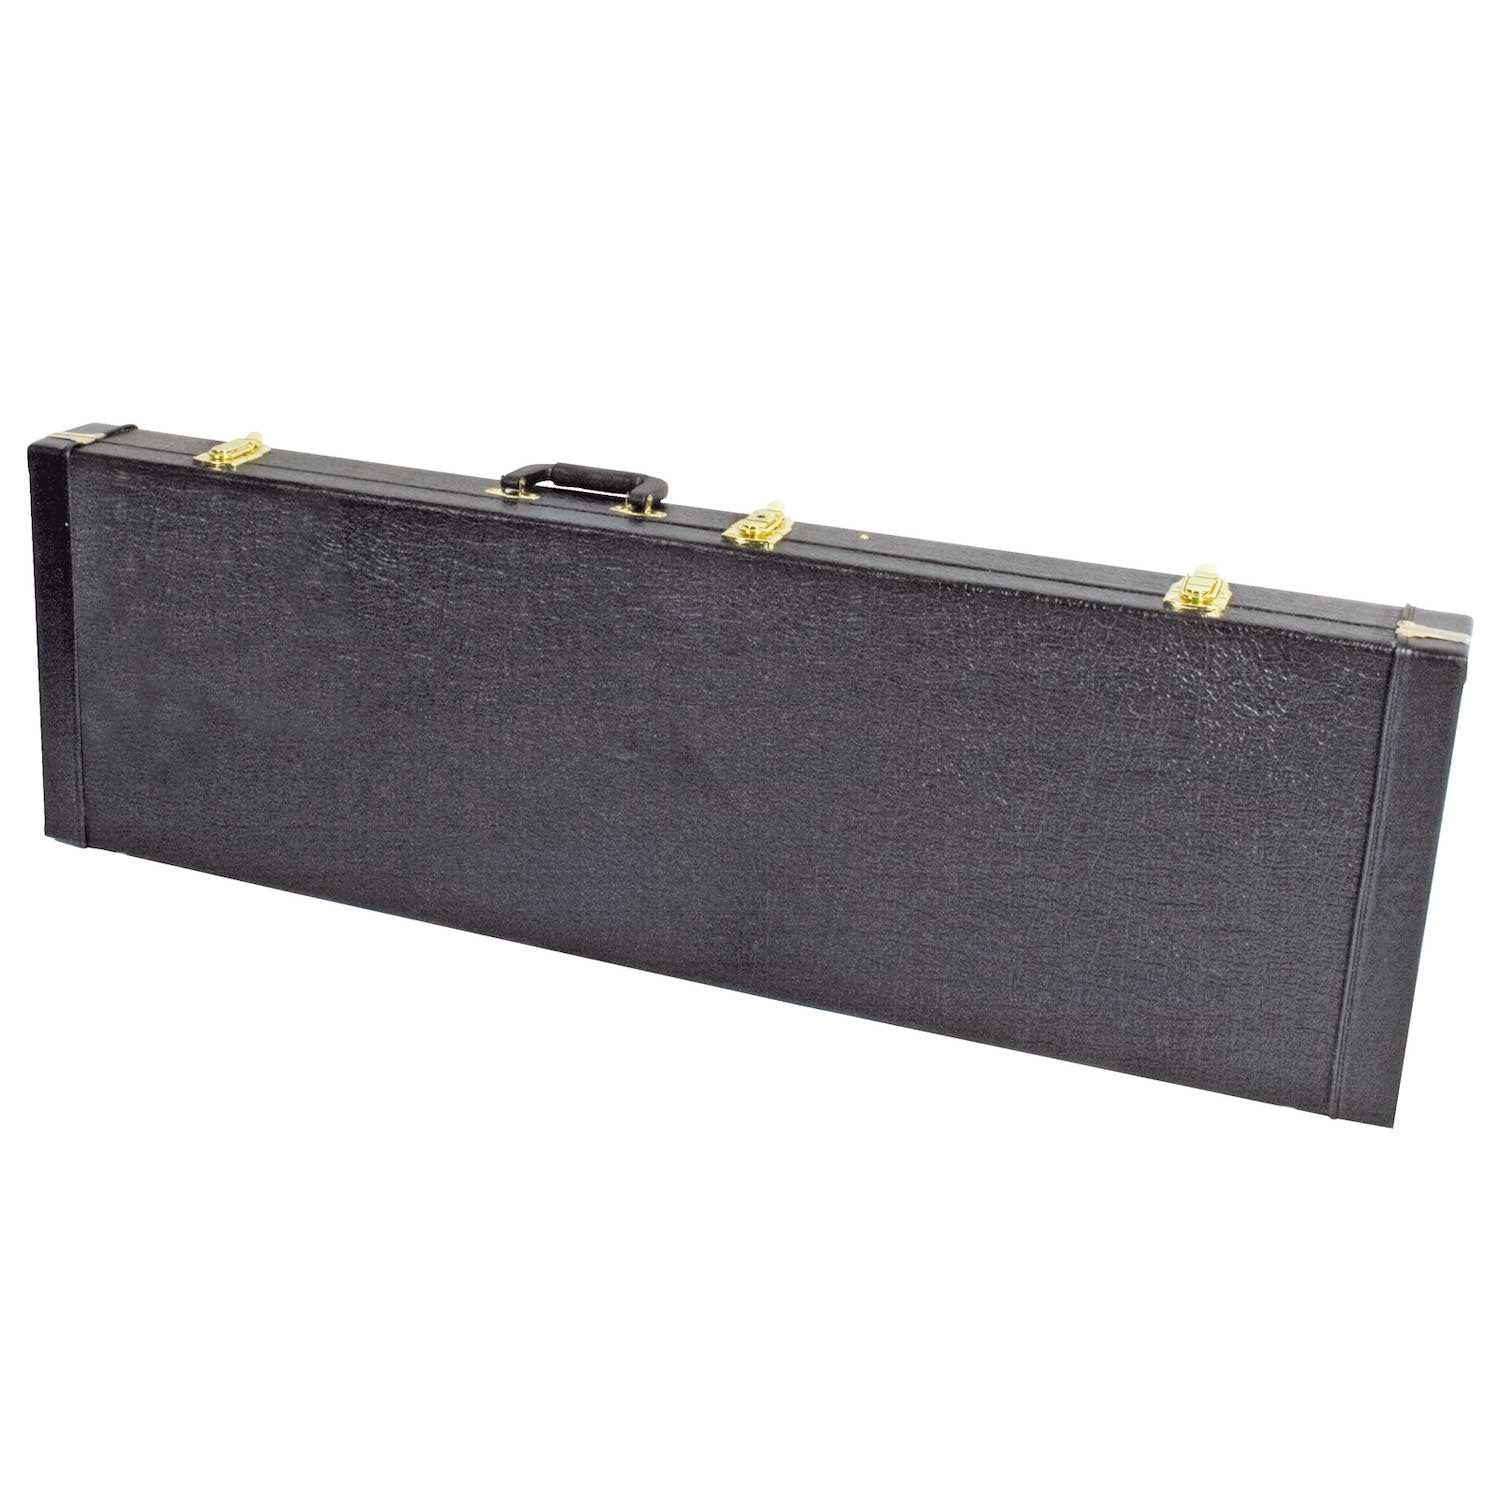 V-Case HC1021 Precision / Jazz Bass Hardcase